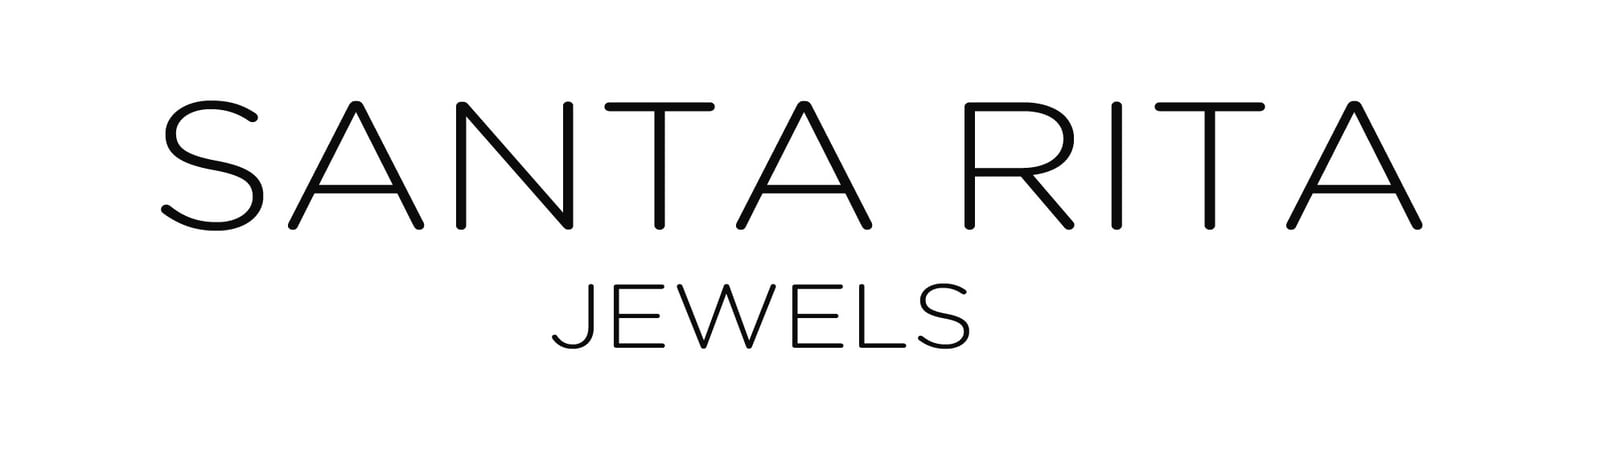 Santa Rita Jewels